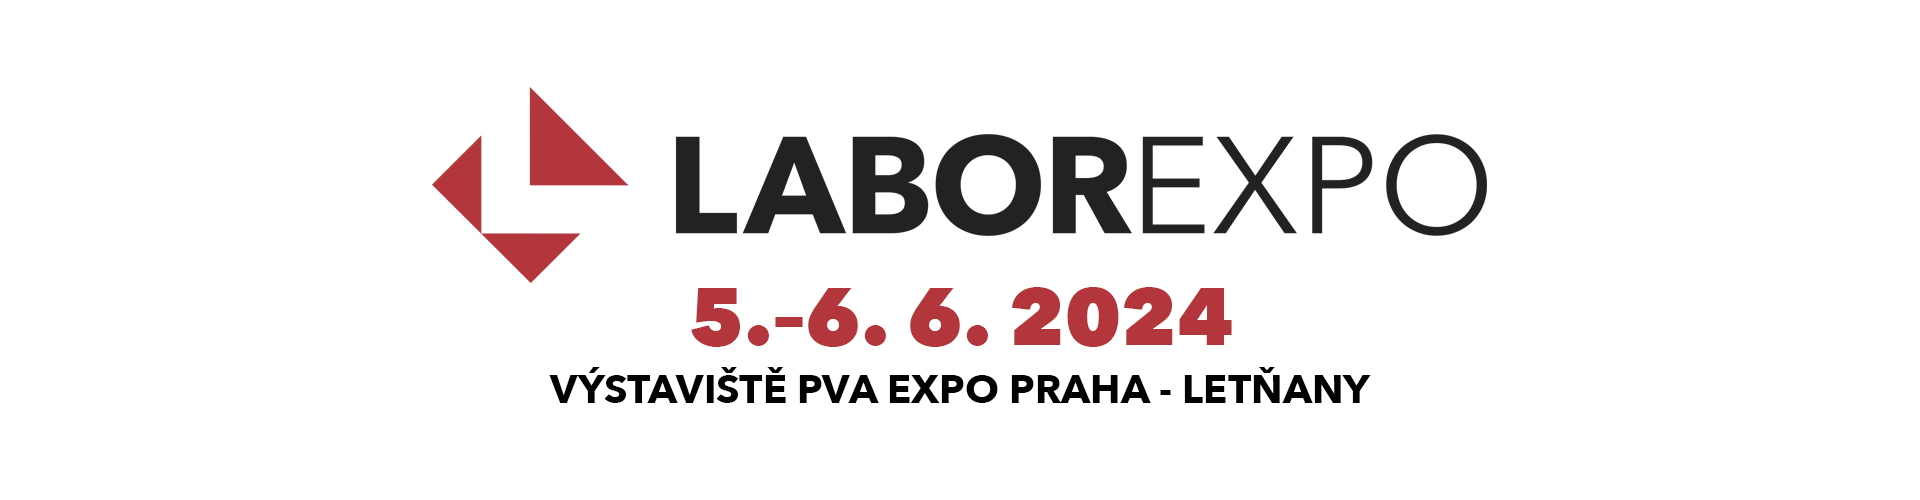 LABOREXPO 2024 - banner